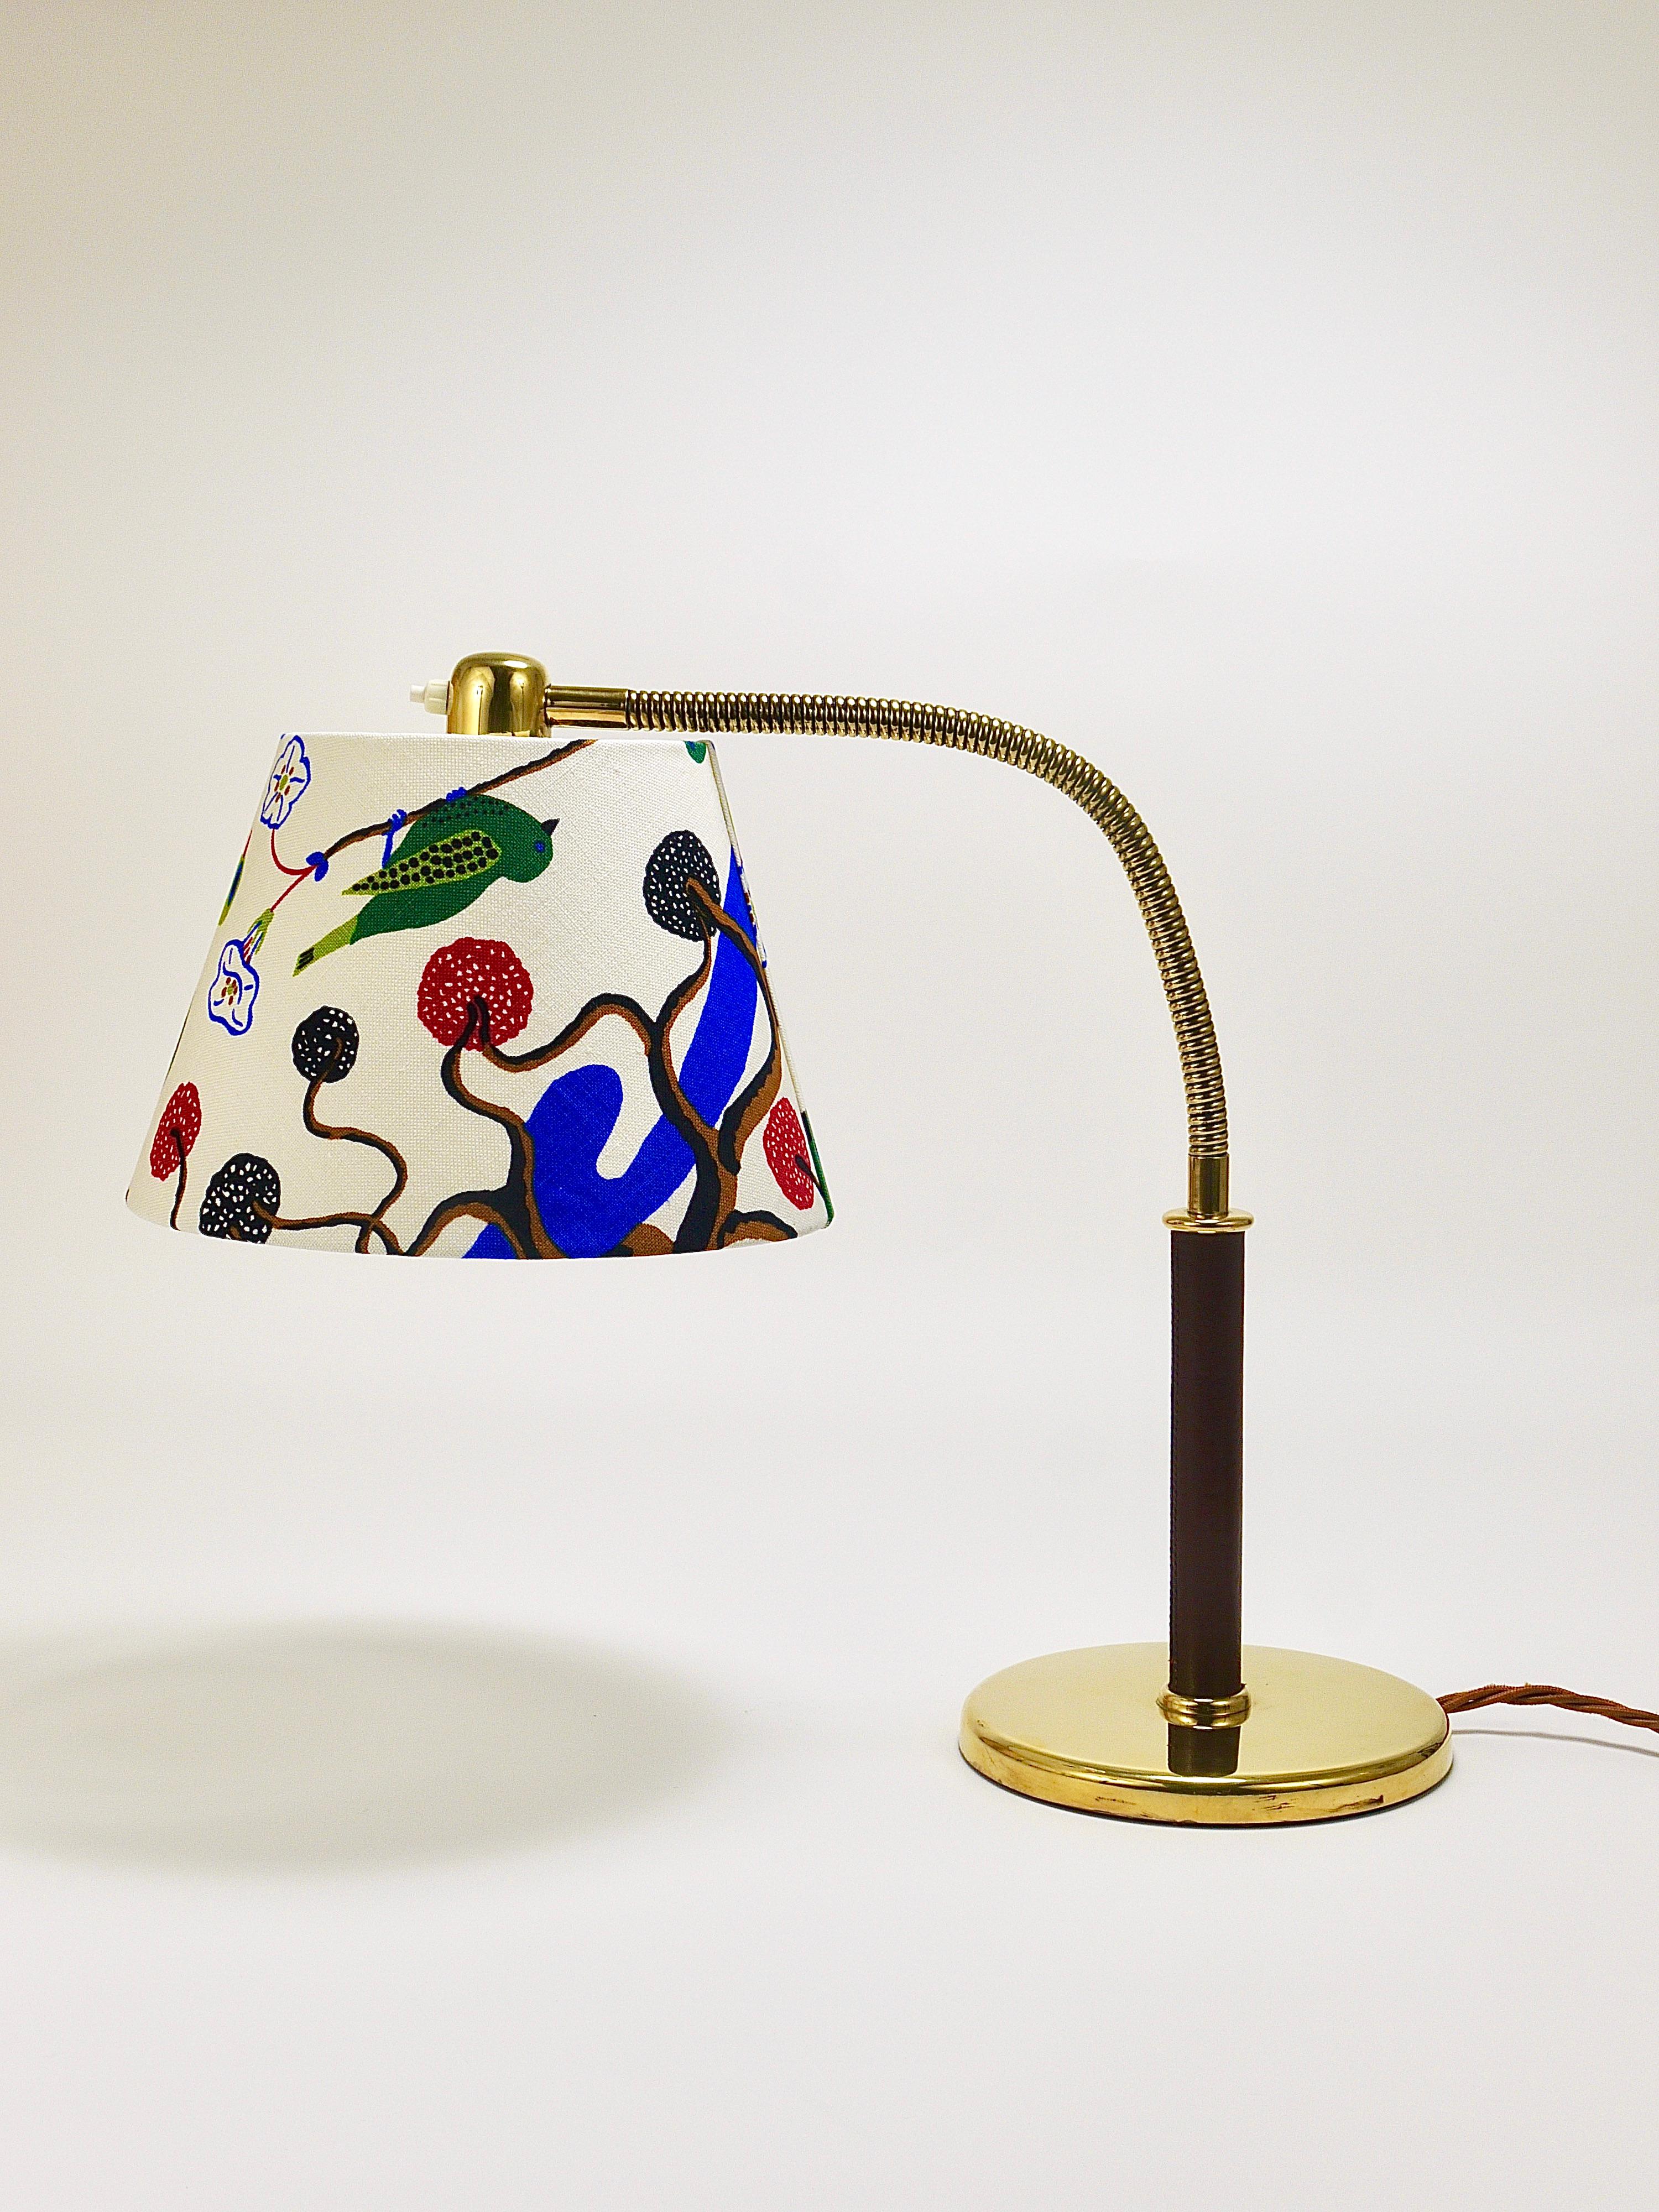 Josef Frank J.T. Kalmar Table Lamp Tisch-Überall, Brass & Leather, Austria, 1930 For Sale 11